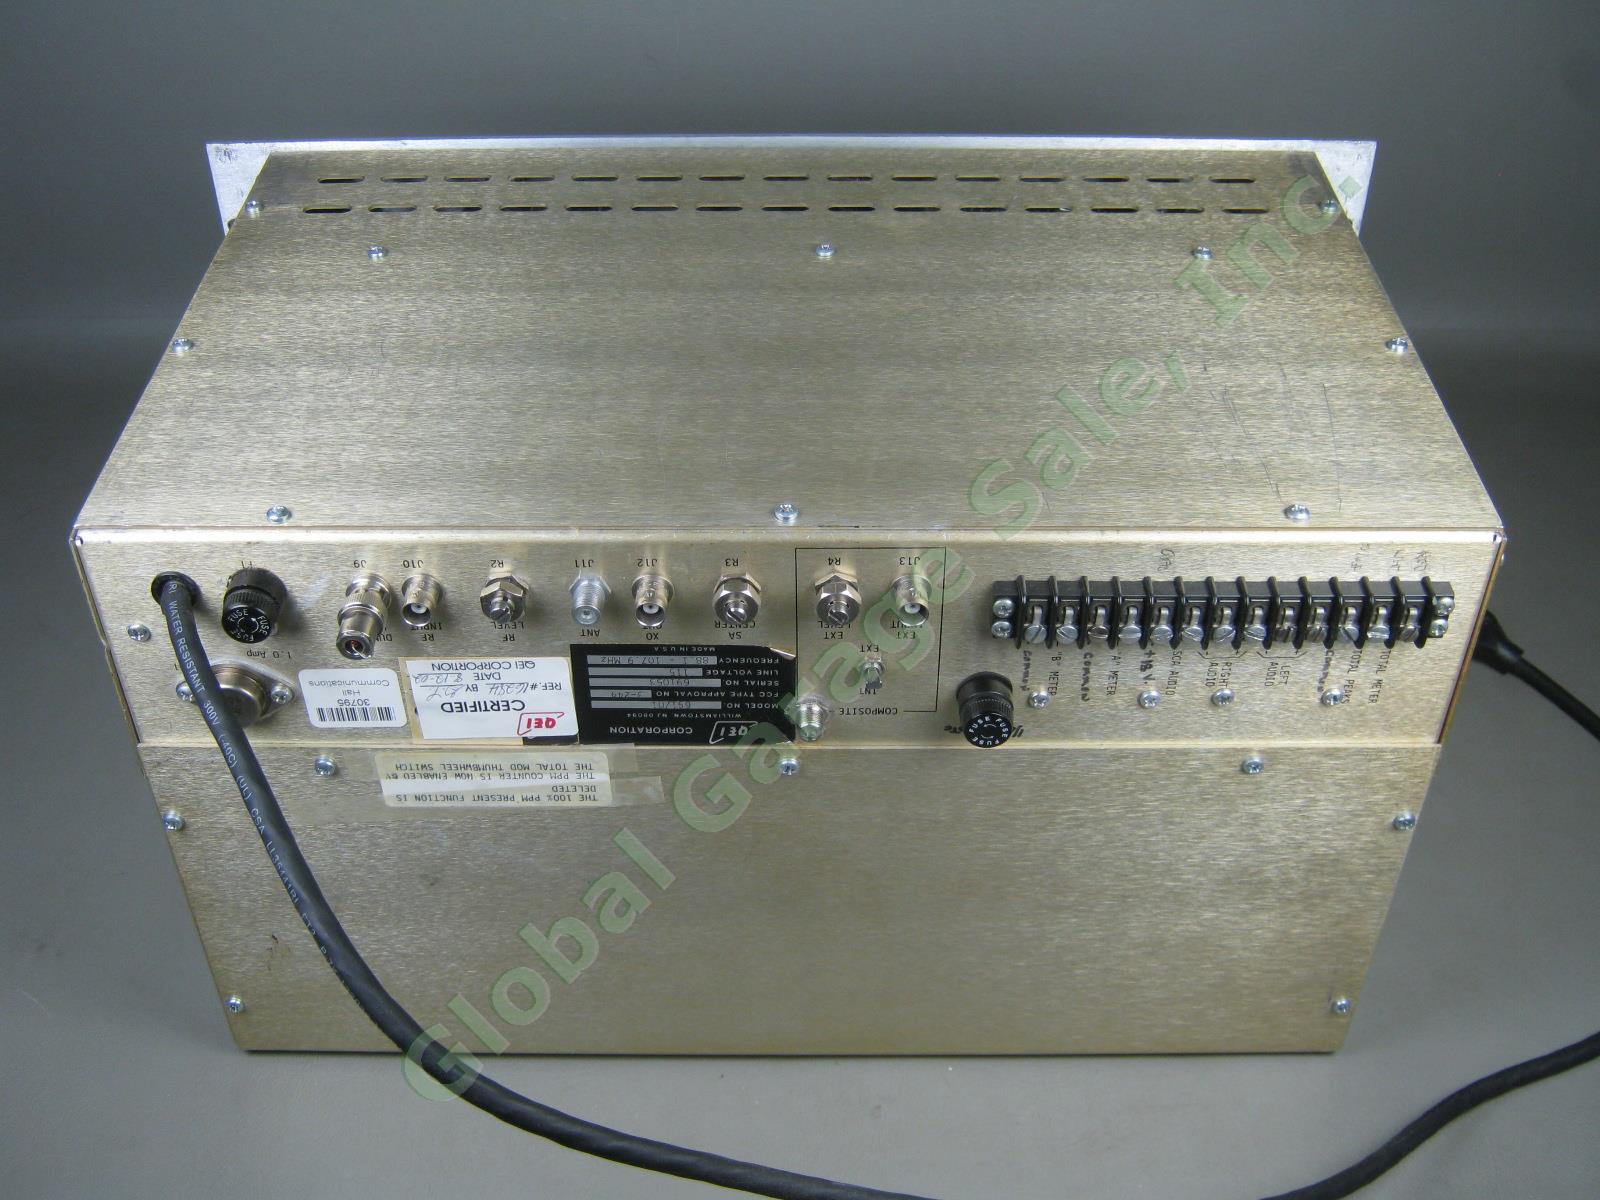 QEI 691 Professional FM Radio Modulation Monitor Test Set Working When Removed 7